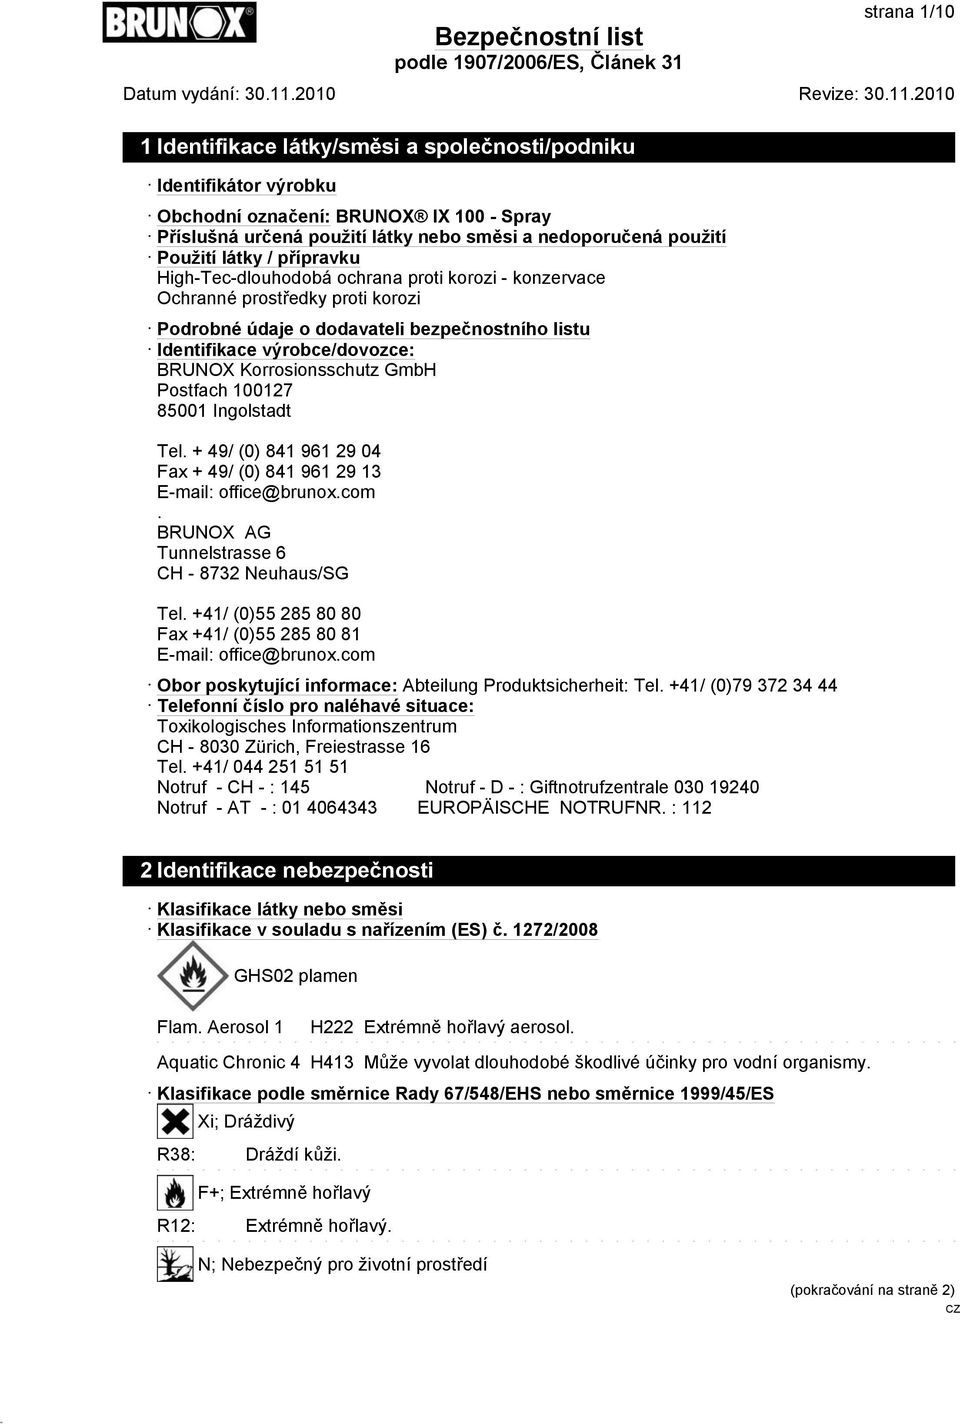 Korrosionsschutz GmbH Postfach 100127 85001 Ingolstadt Tel. + 49/ (0) 841 961 29 04 Fax + 49/ (0) 841 961 29 13 E-mail: office@brunox.com. BRUNOX AG Tunnelstrasse 6 CH - 8732 Neuhaus/SG Tel.